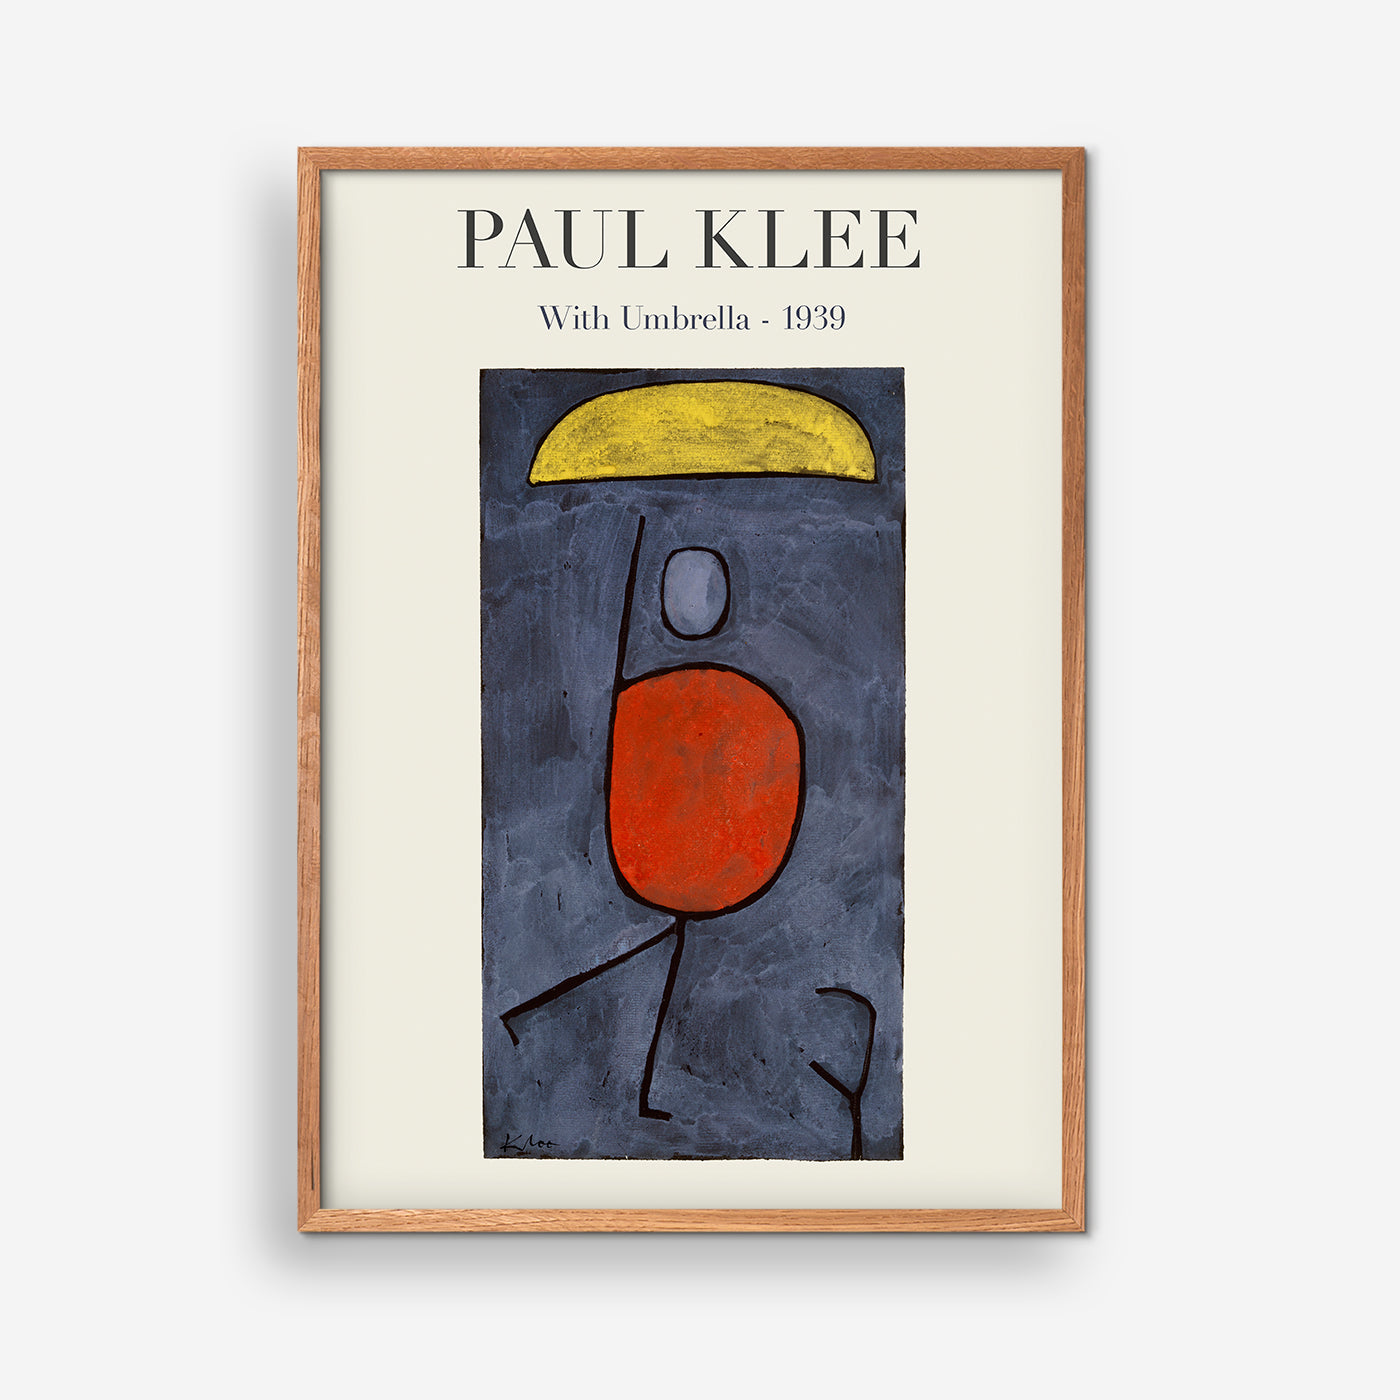 With Umbrella, 1939 - Paul Klee